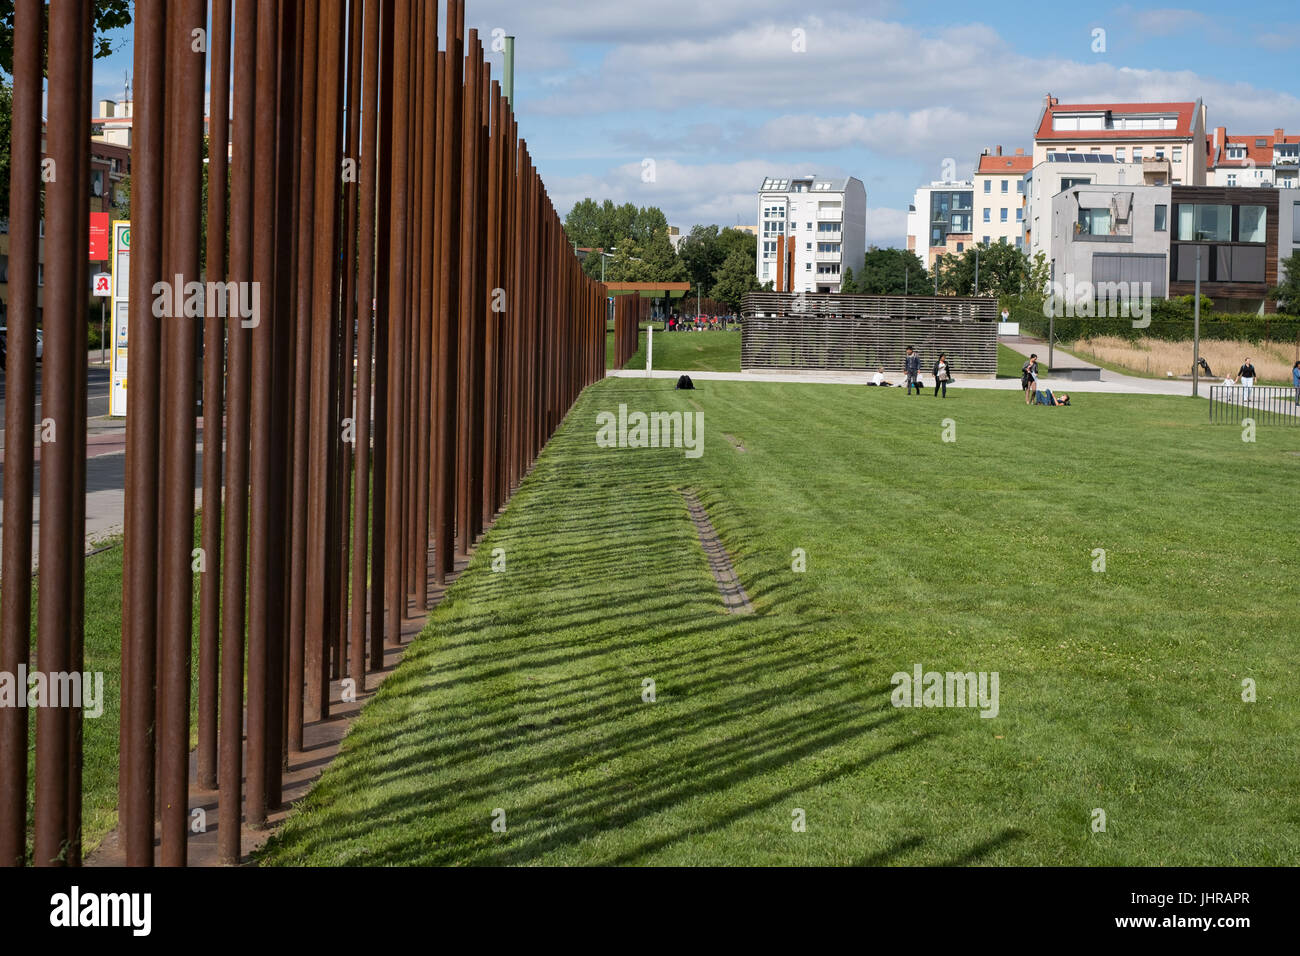 Berlin, Deutschland - 13. Juli 2017: Reste der Berliner Mauer / Berliner Mauer-Gedenkstätte an der Bernauer Straße in Berlin, Deutschland. Stockfoto